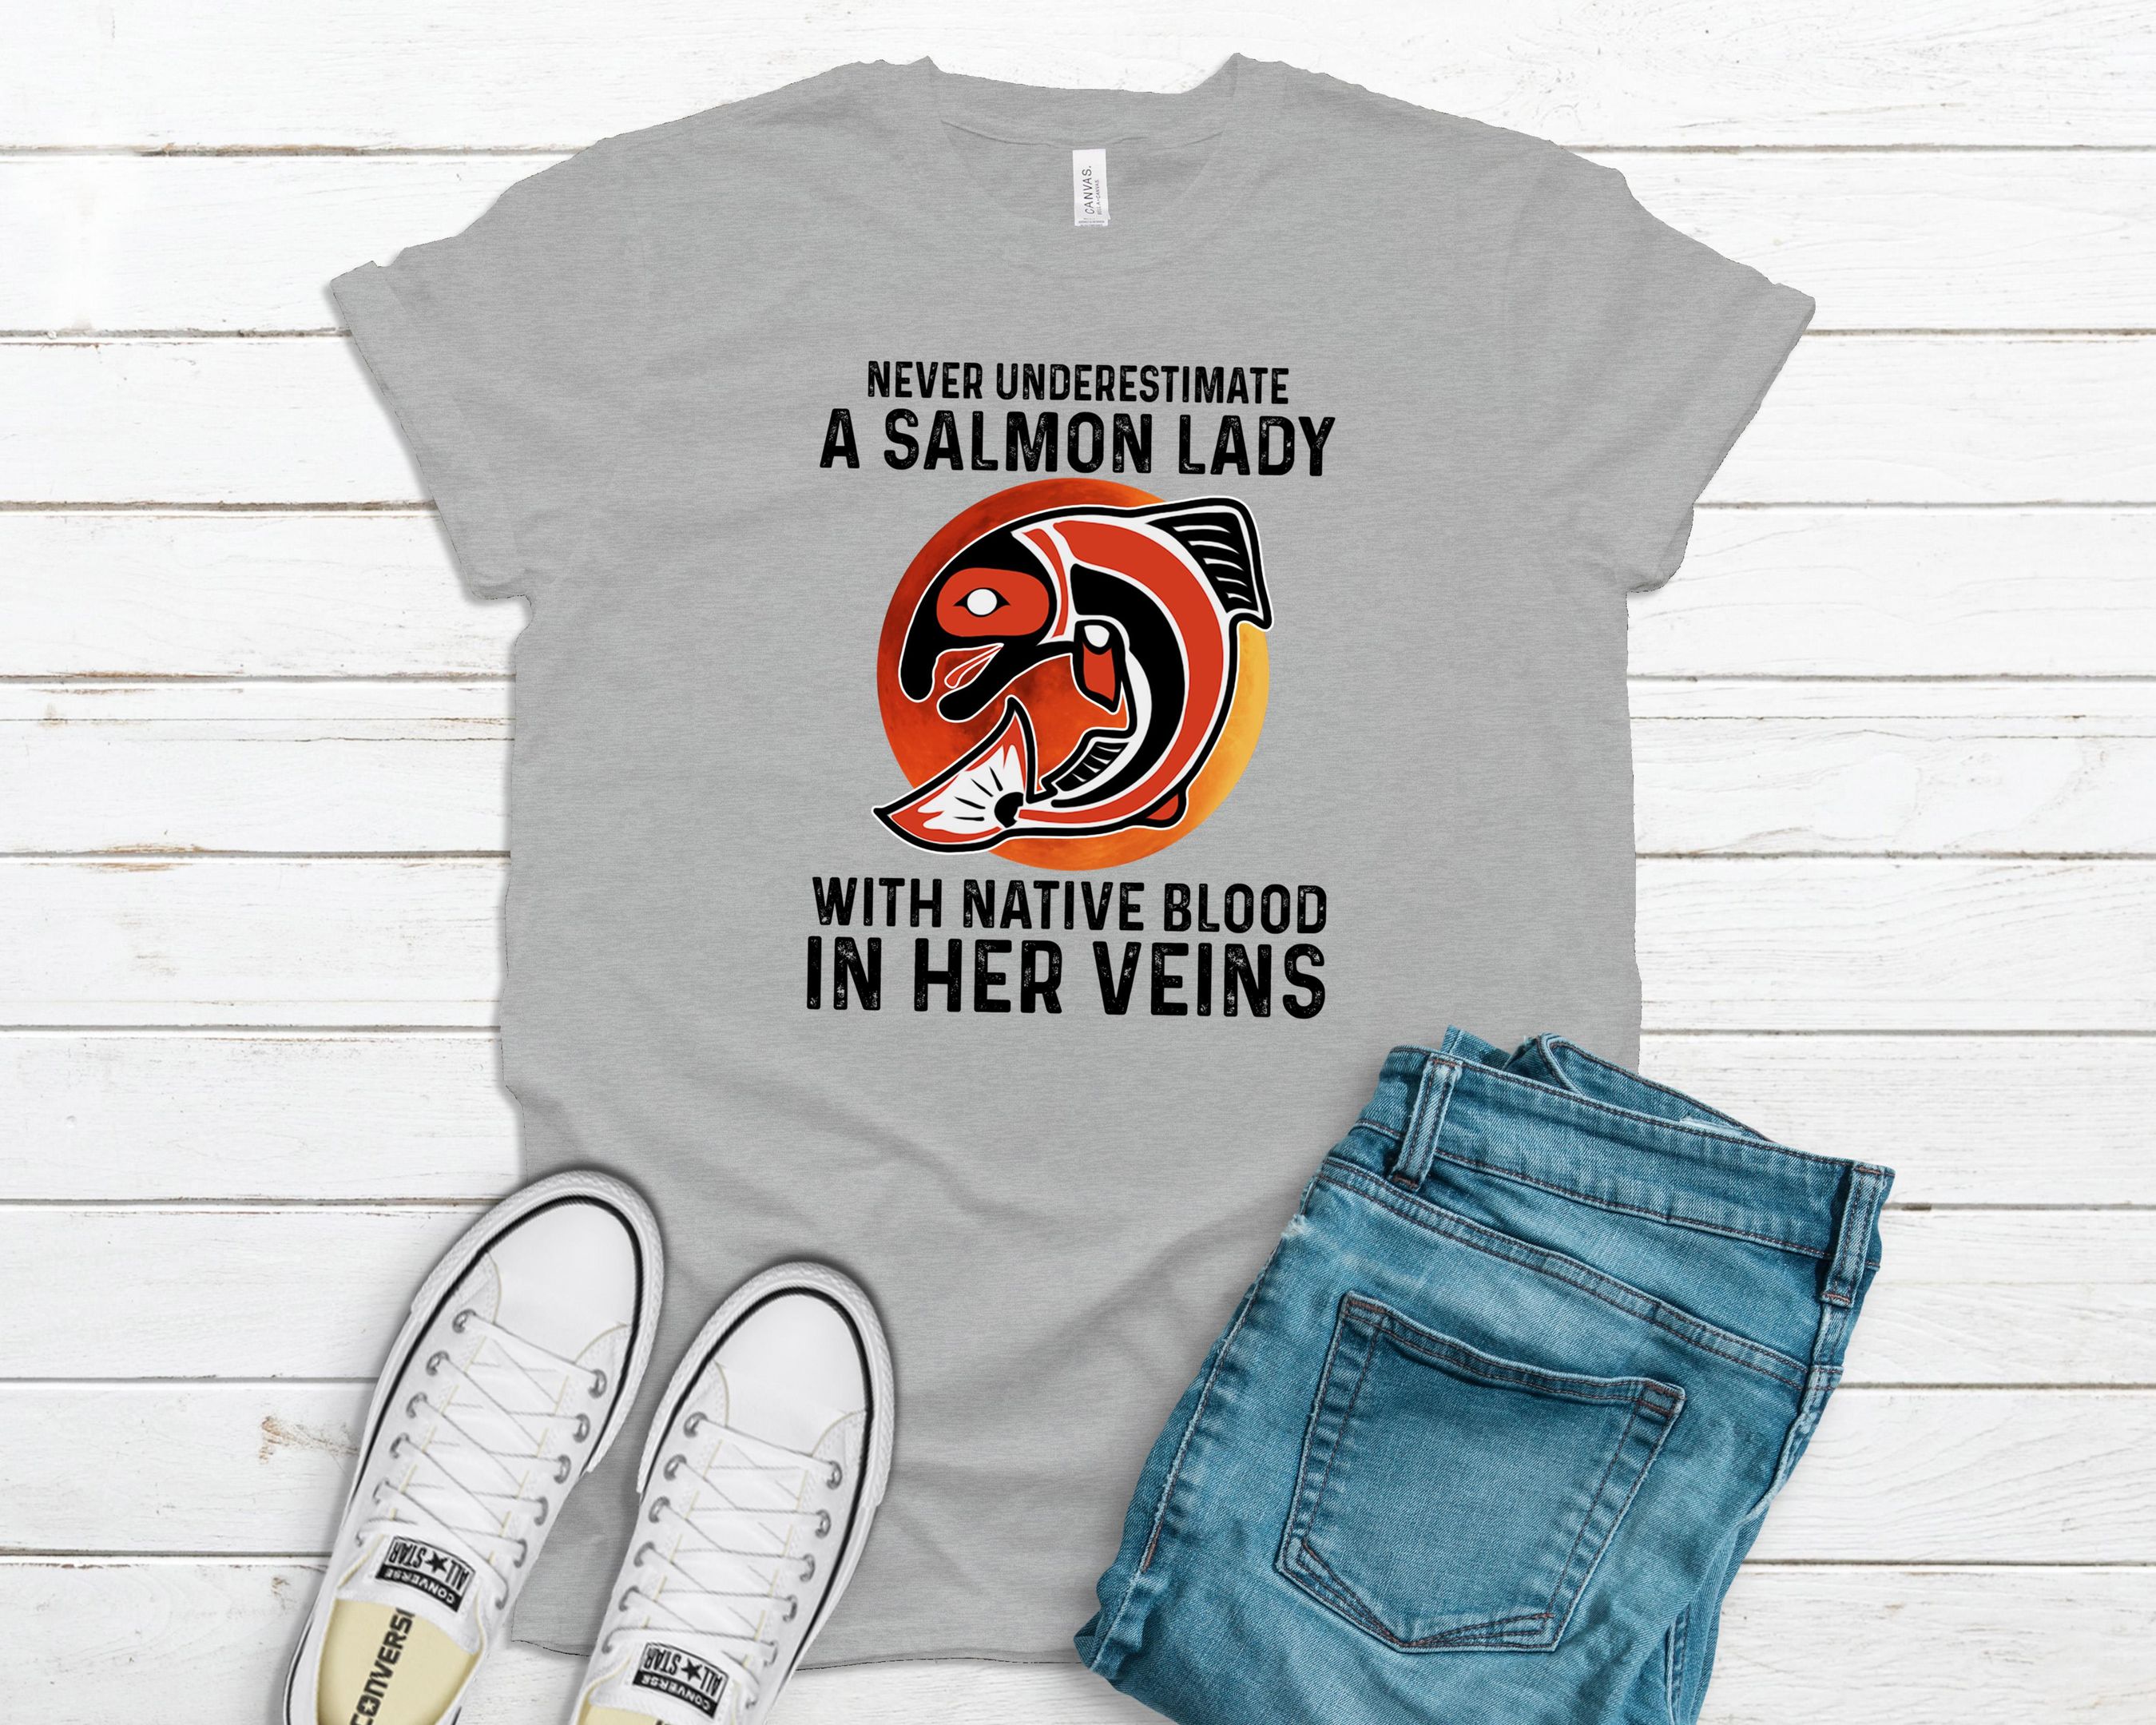 A Salmon Lady Shirt, Native Blood Shirt, Native American Zodiac Sign Shirt